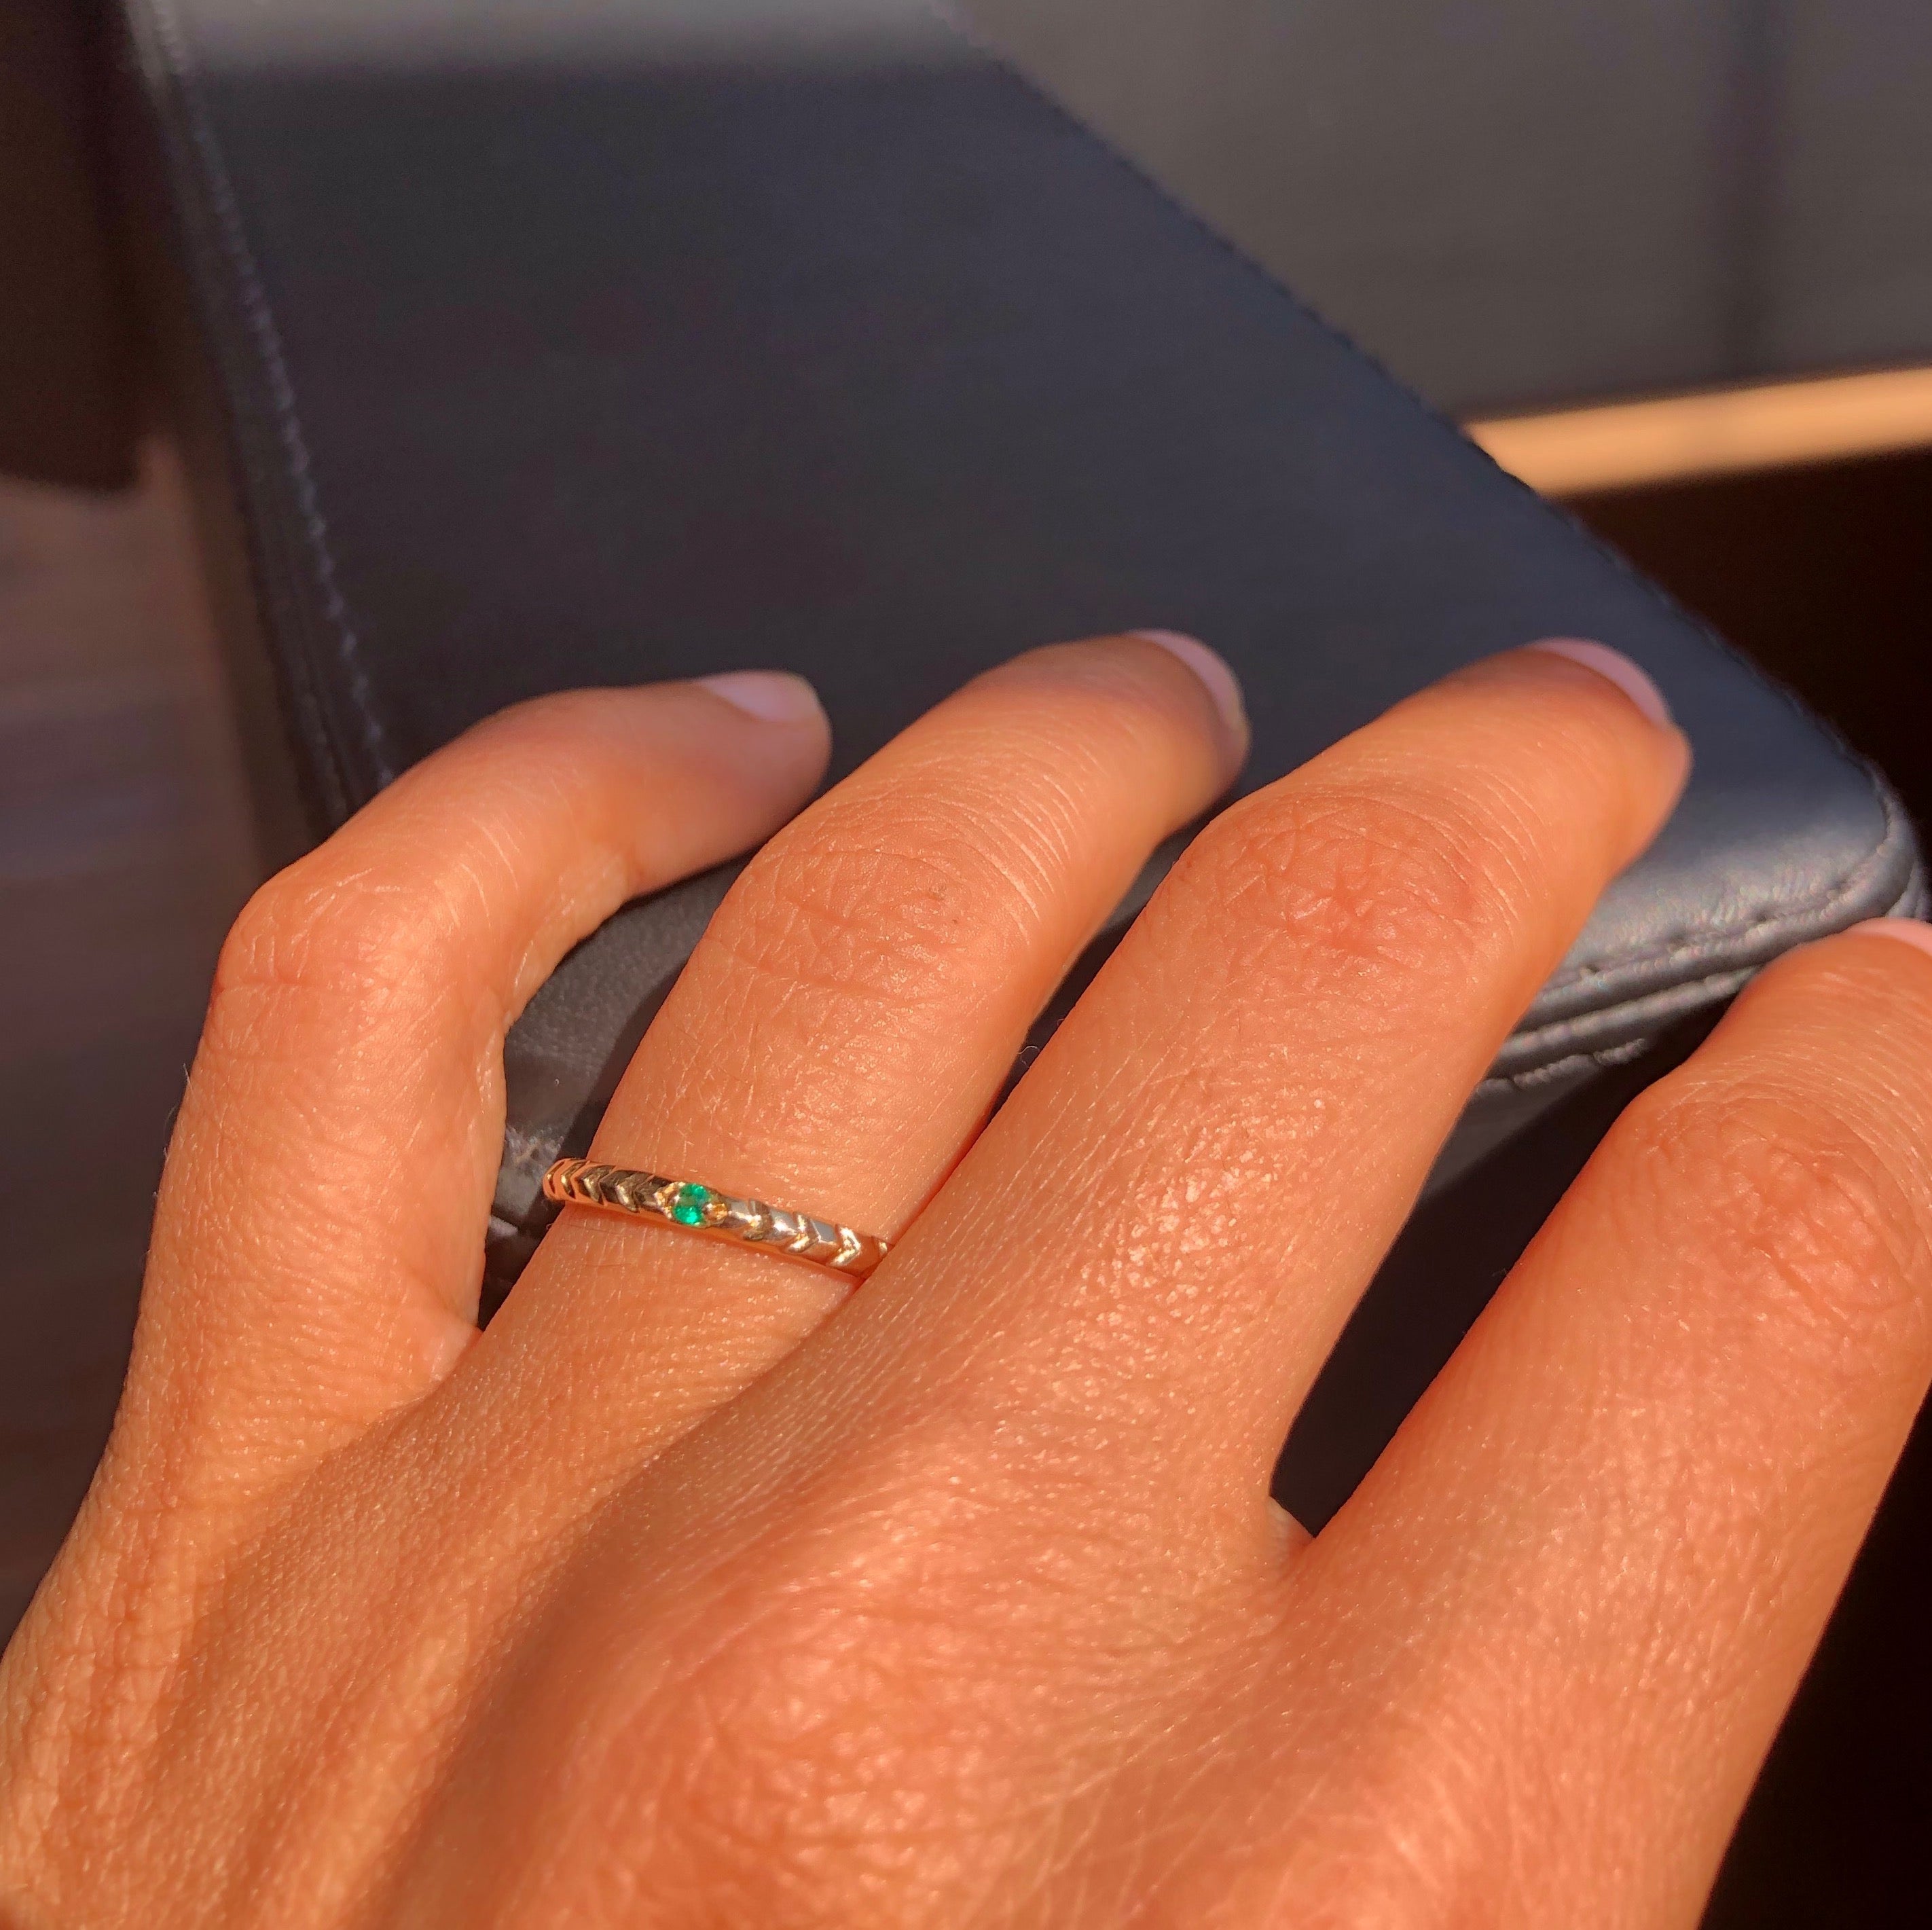 Clea Ring - Emerald